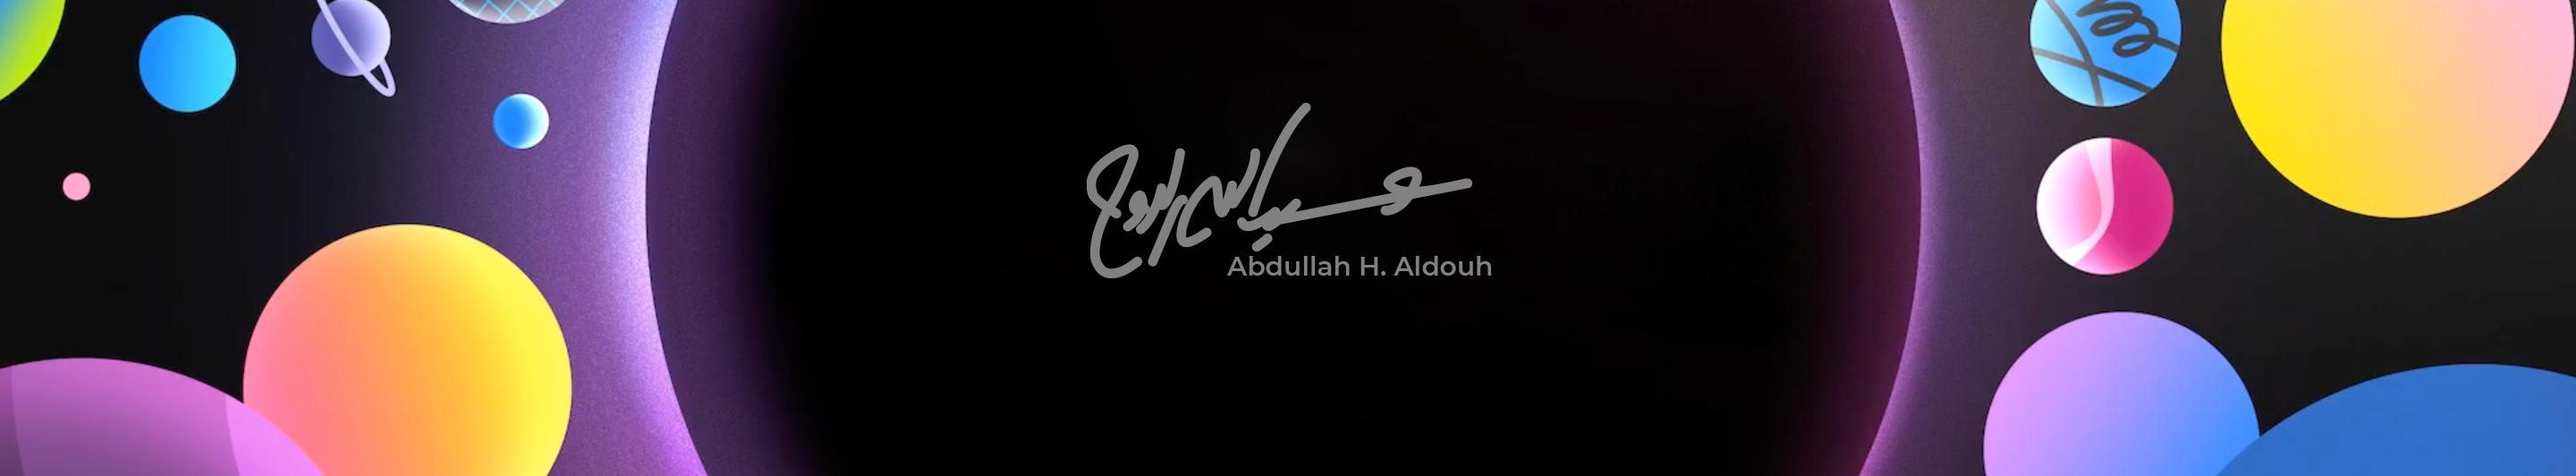 Abdullah Aldouh's profile banner